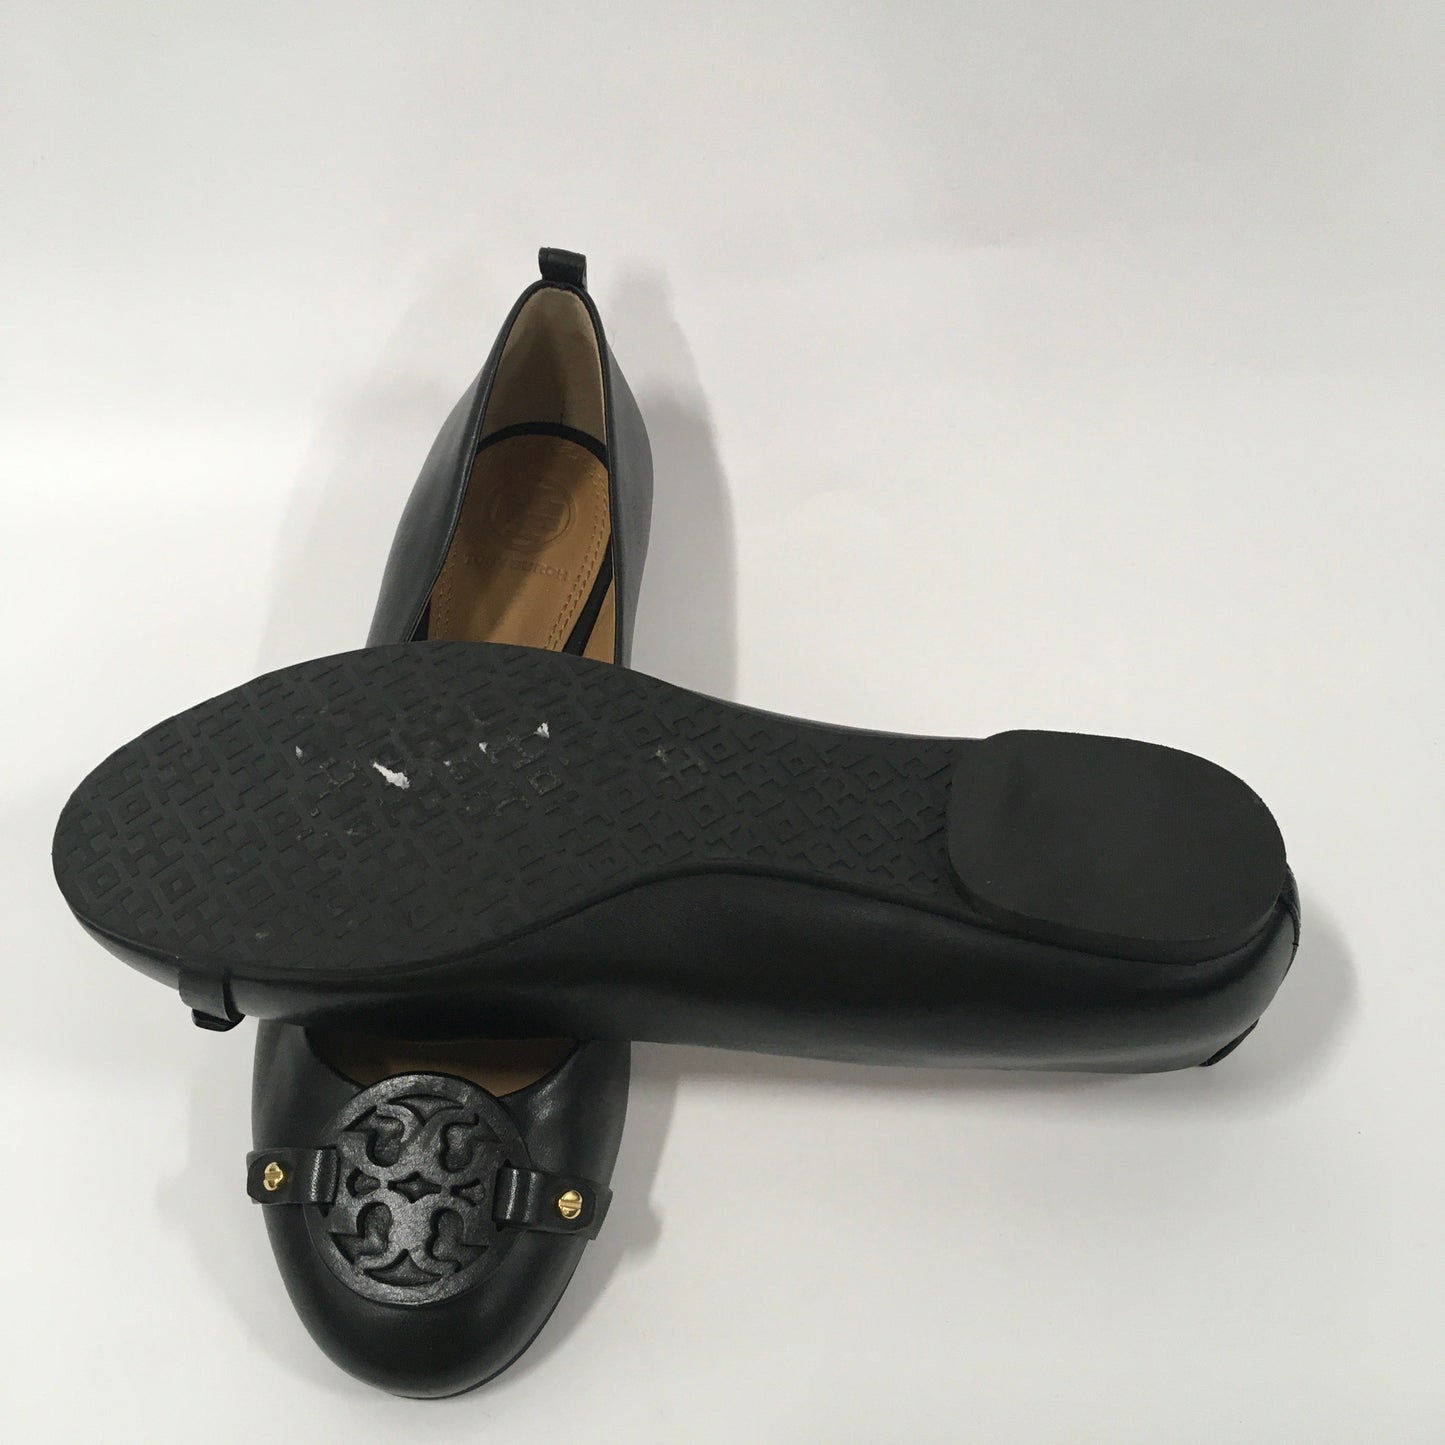 Black Shoes Flats Tory Burch, Size 7.5